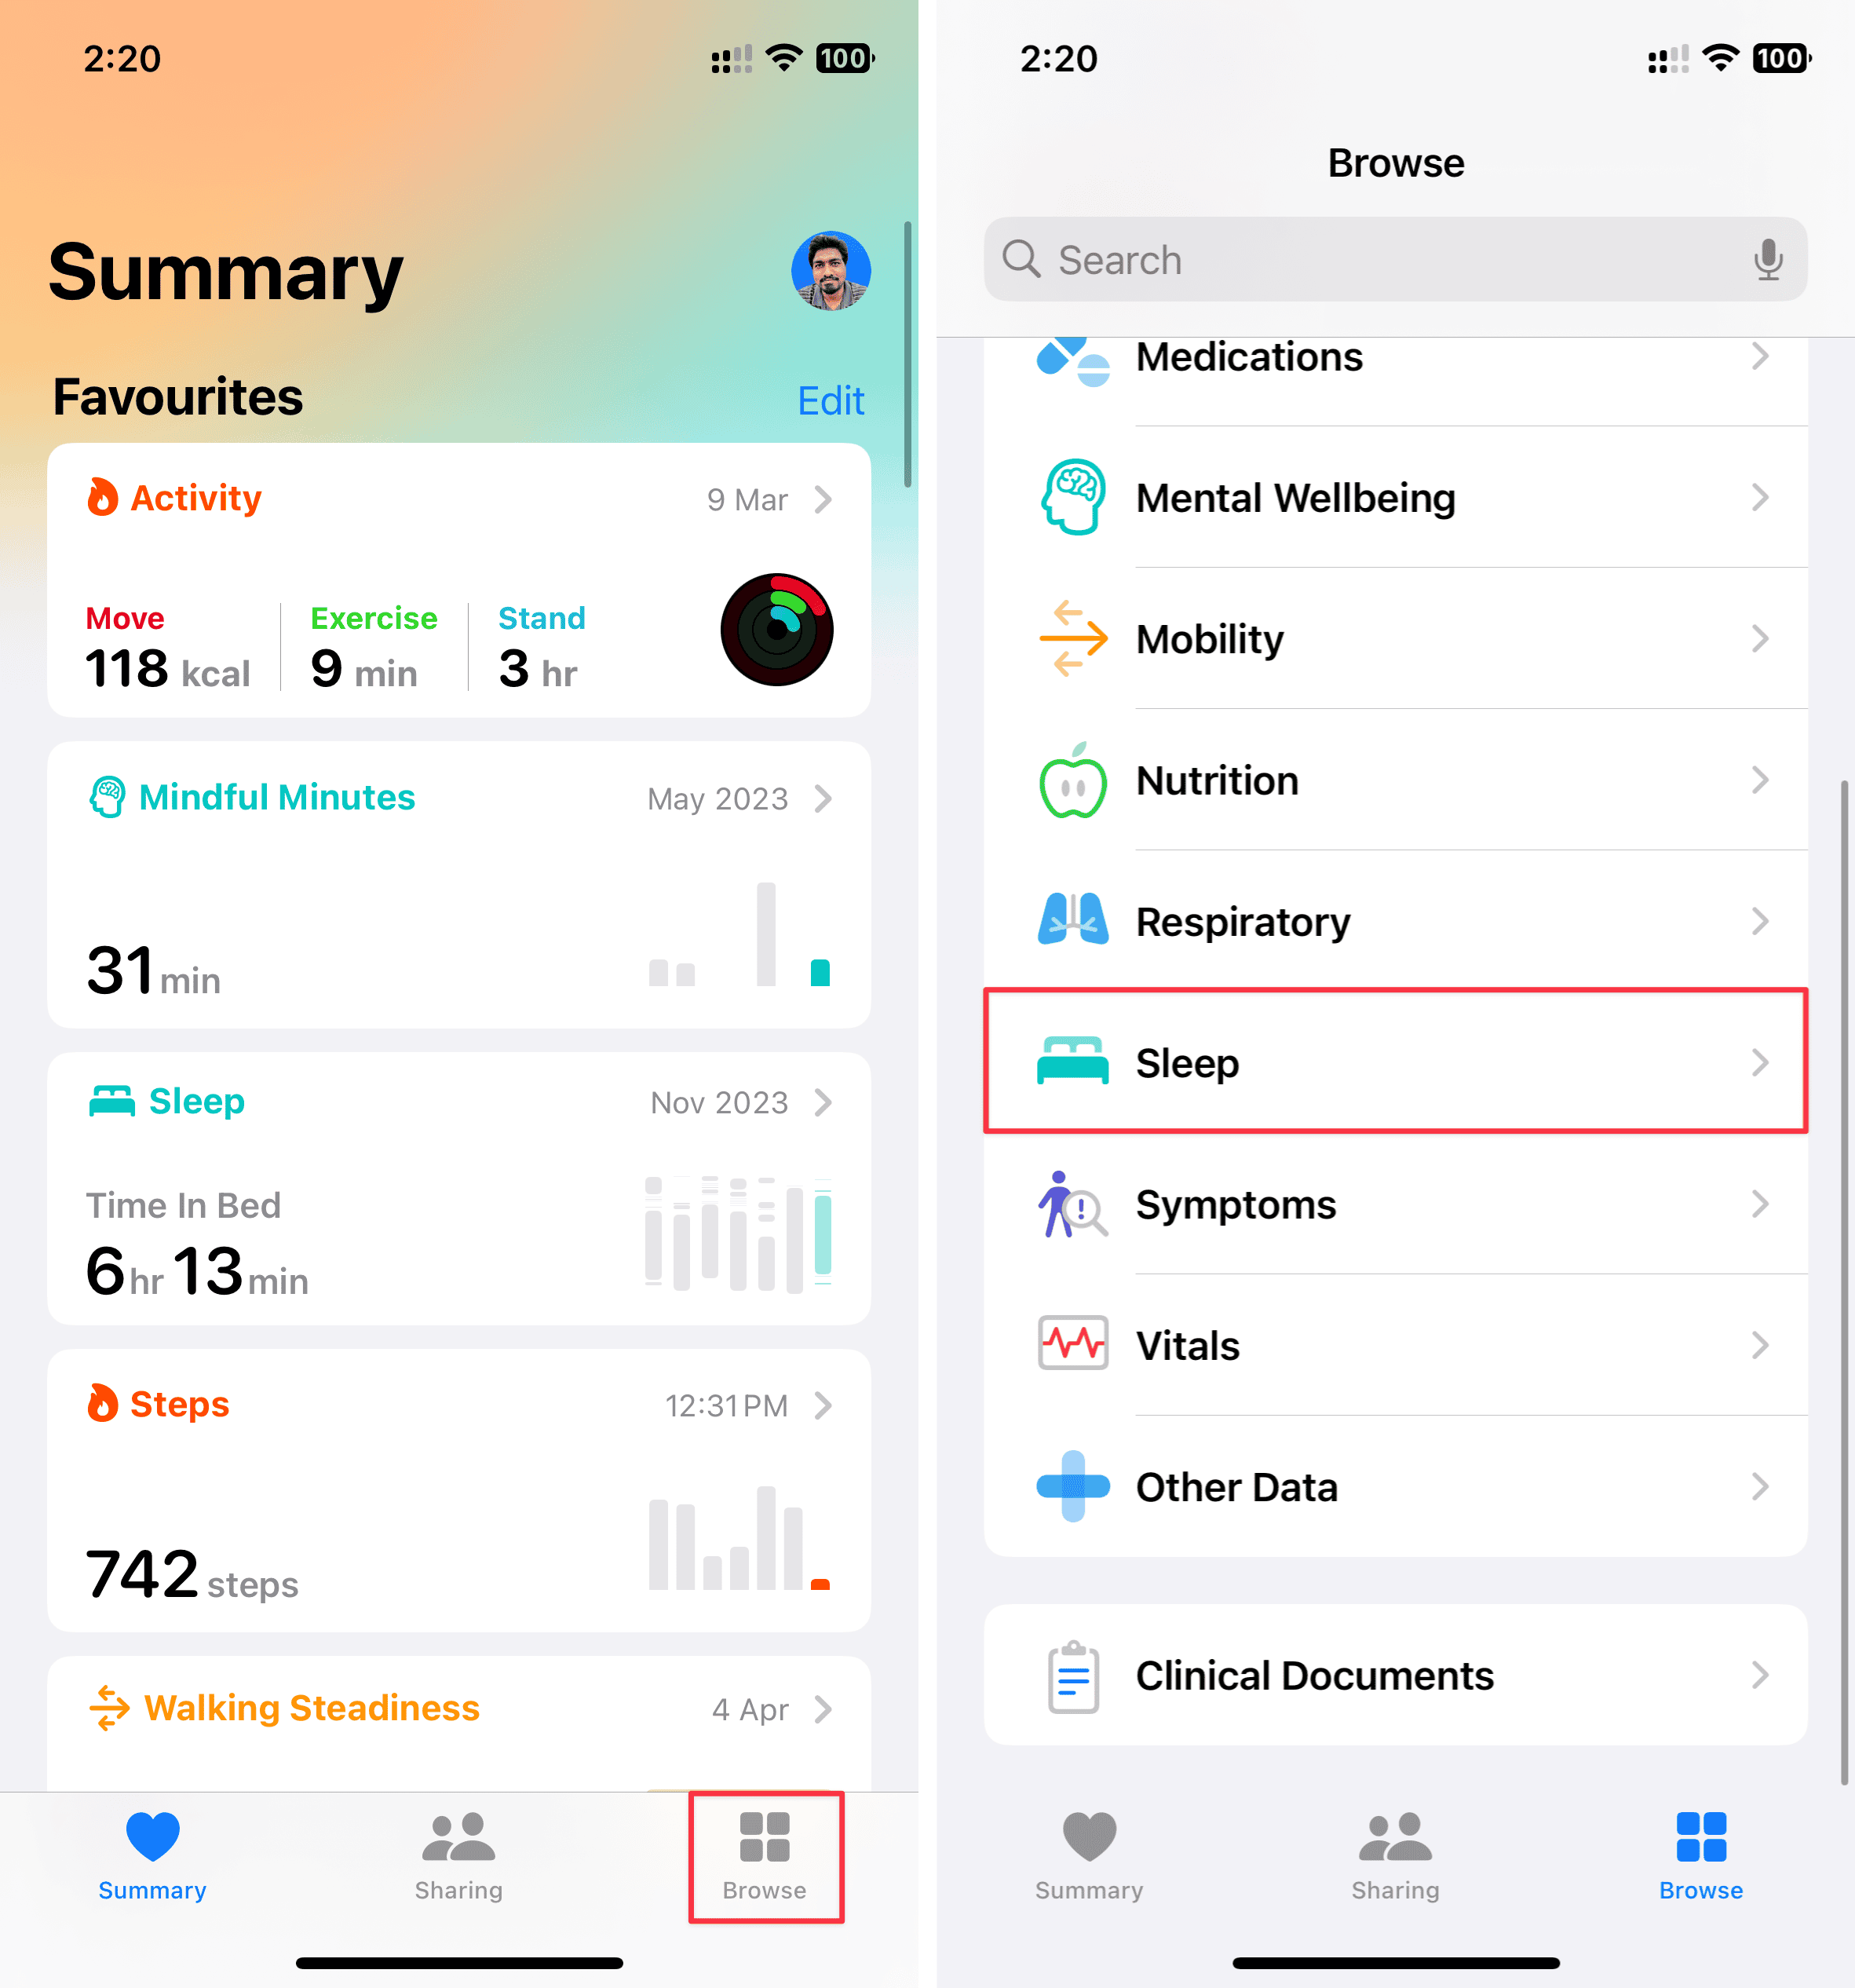 Sleep option in the Health app under Browse tab